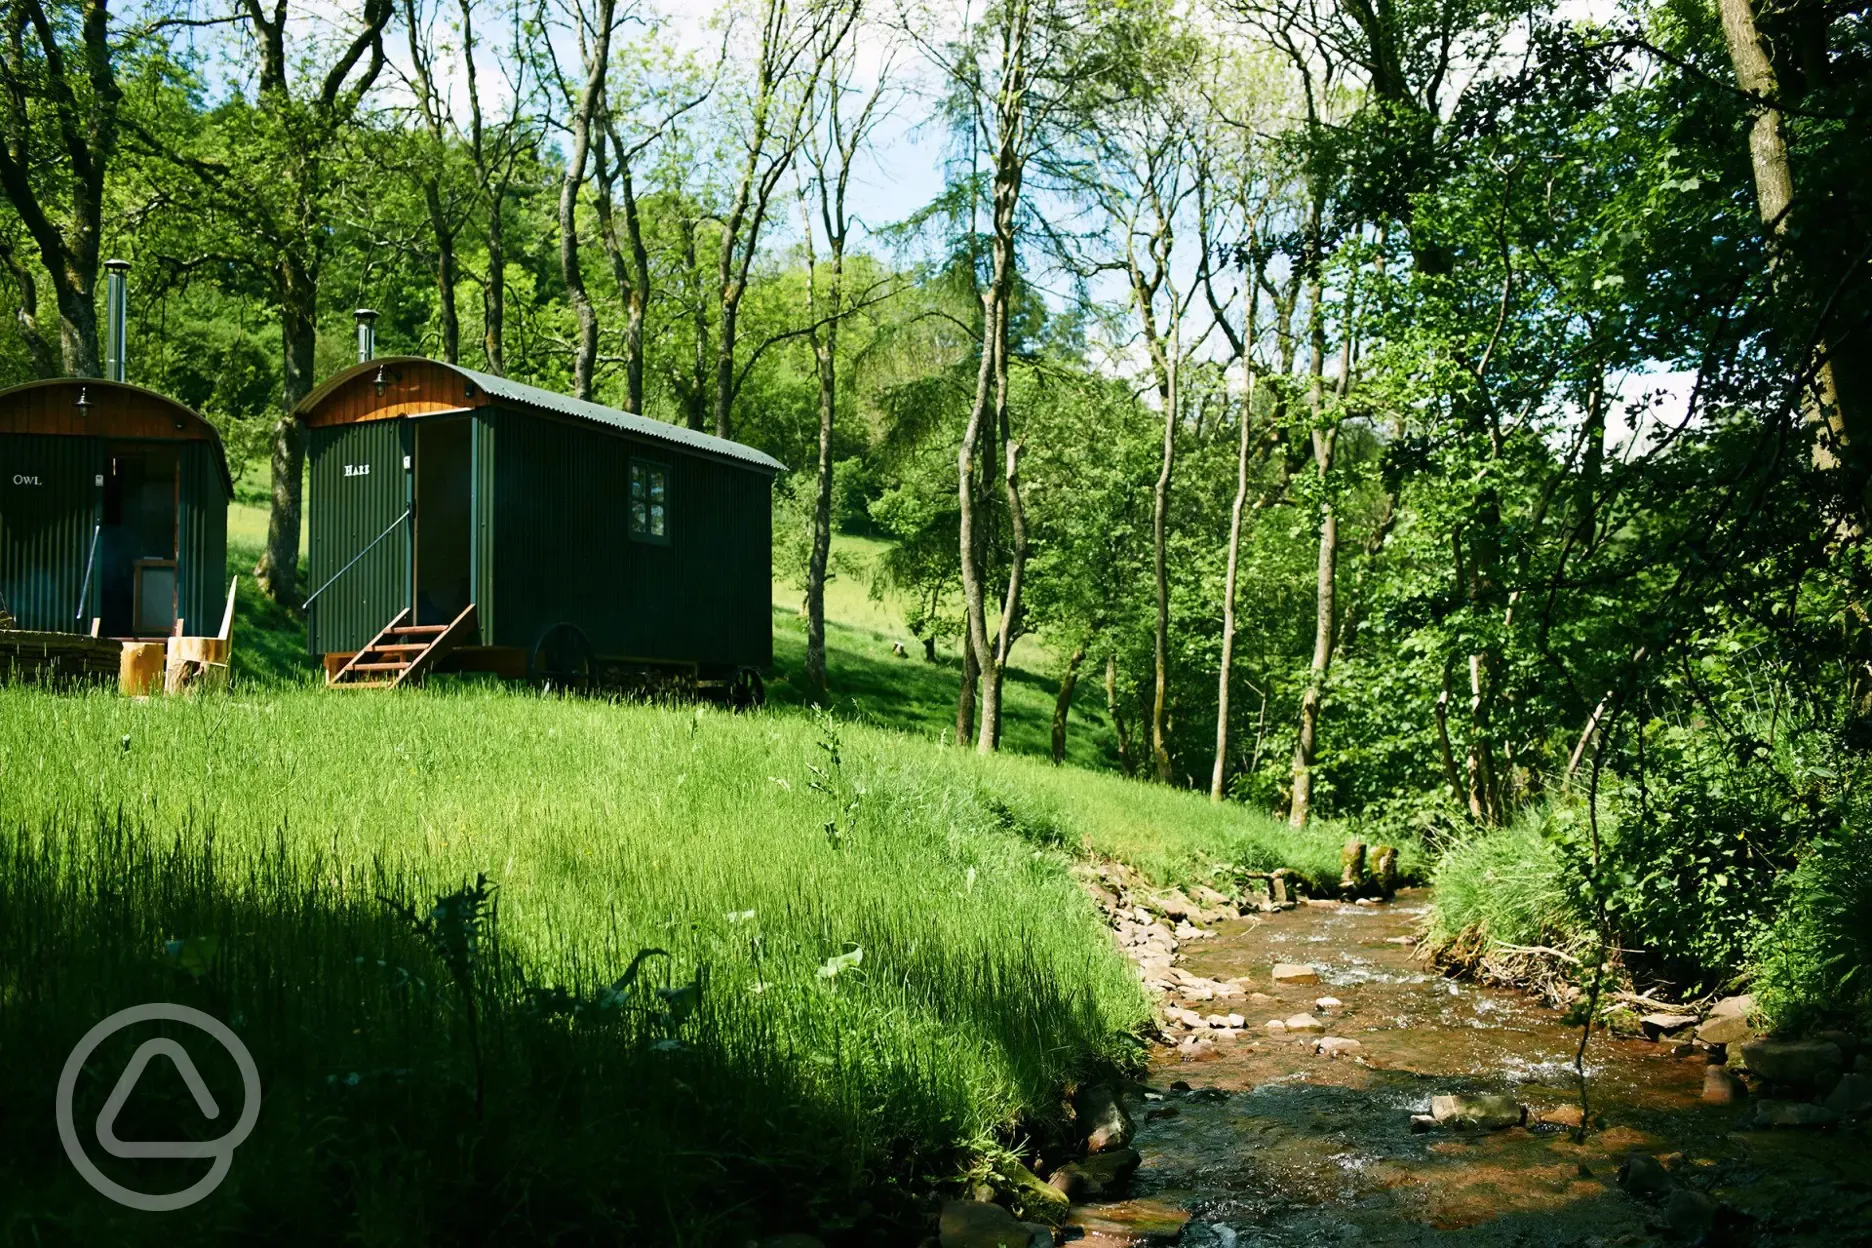 Shepherd's hut